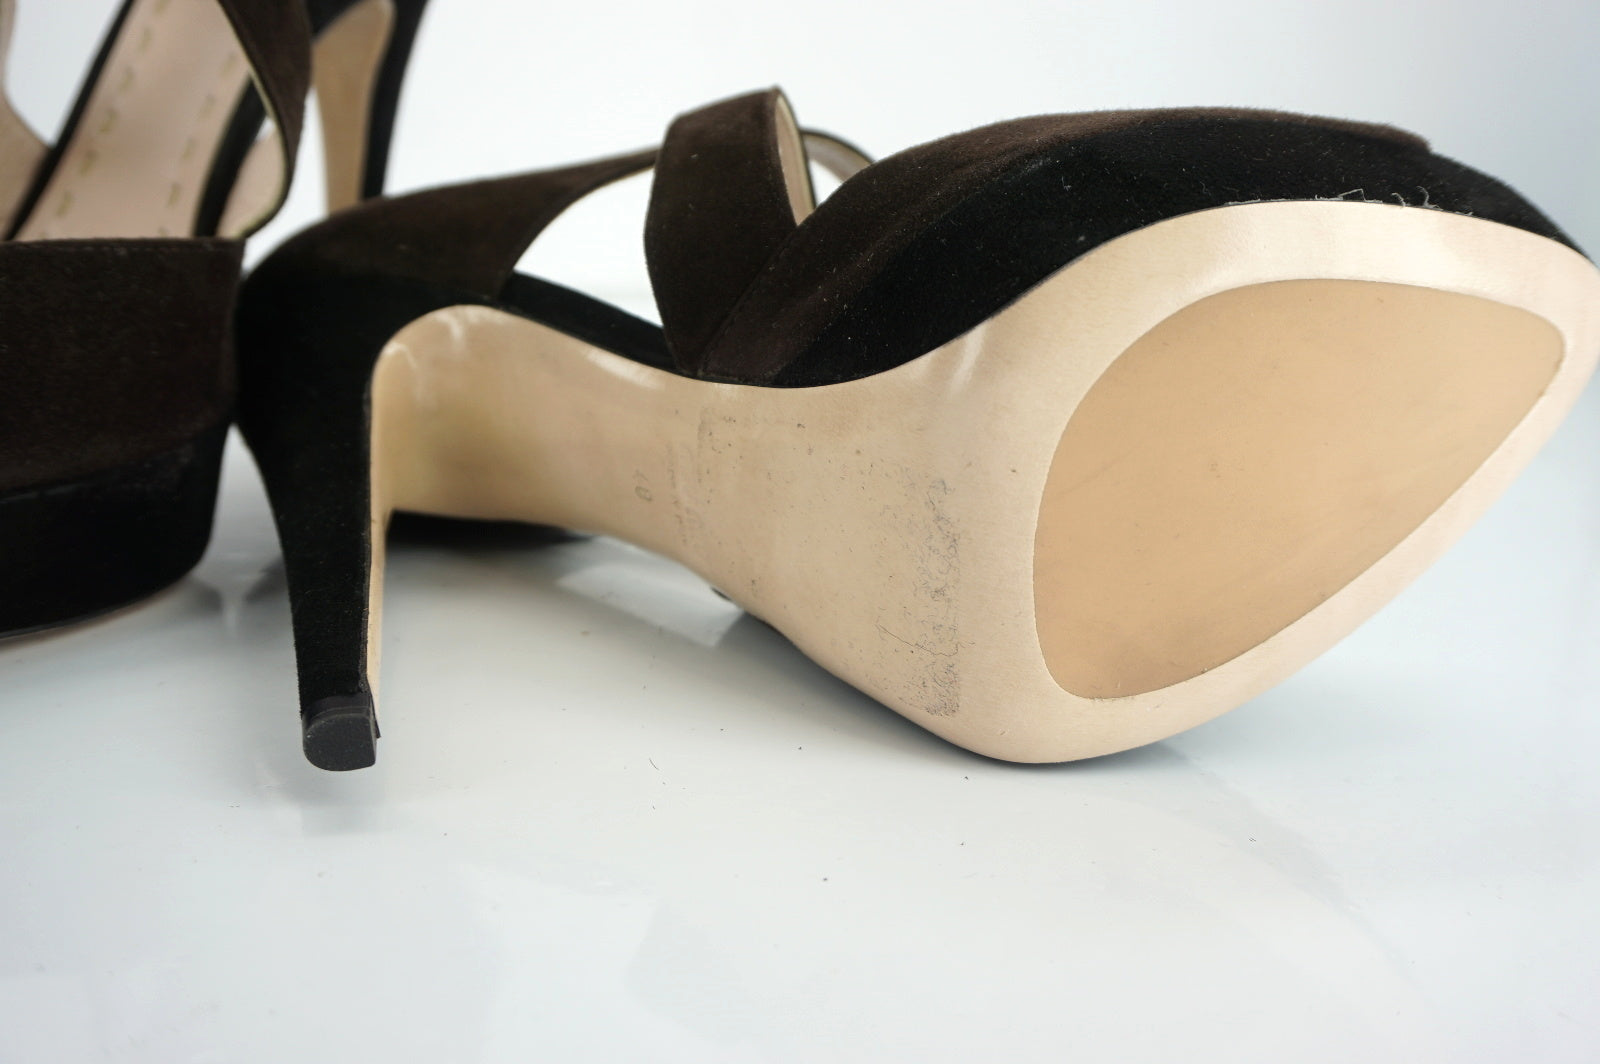 Miu Miu Two Tone Suede Strappy Caged Platform Heel Sandals Size 40 10 New $650